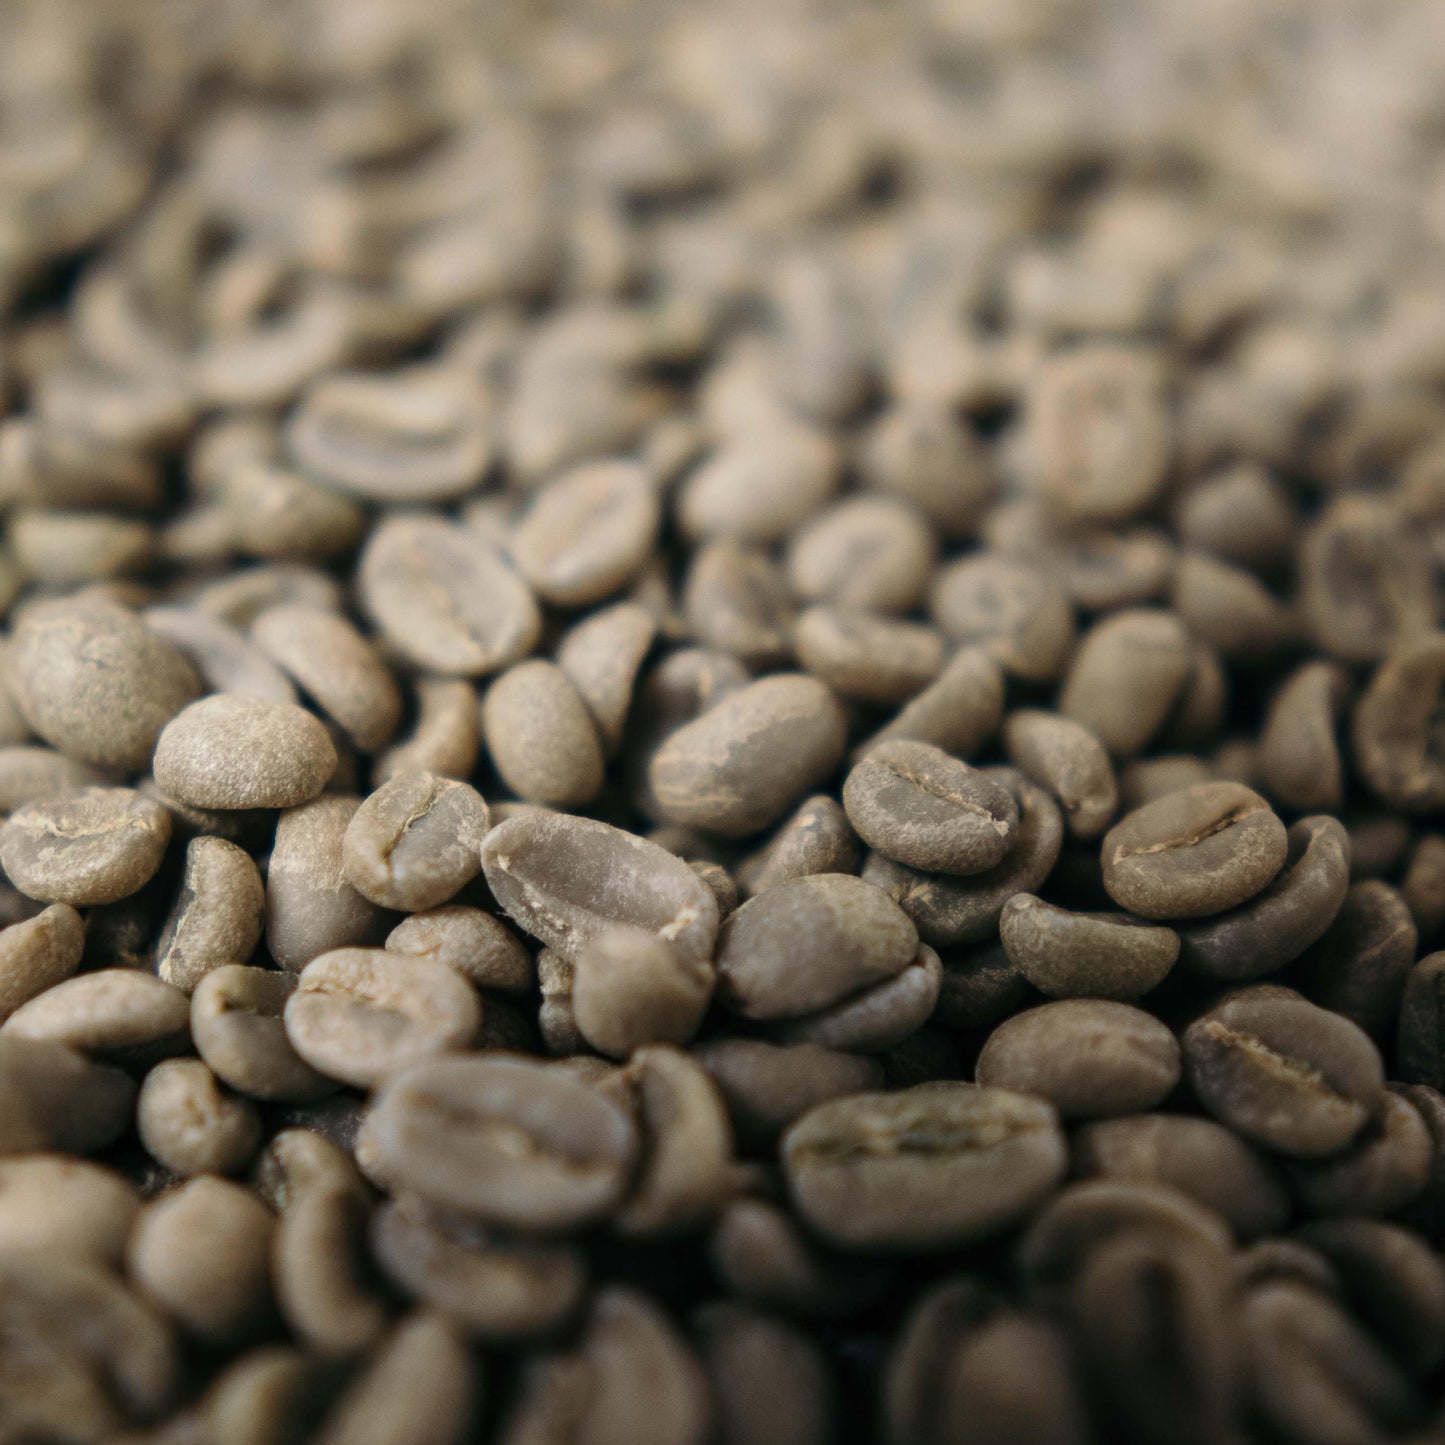 "Valderrama"- House blend # 4: Colombia Espresso Intense - Raw, green coffee beans